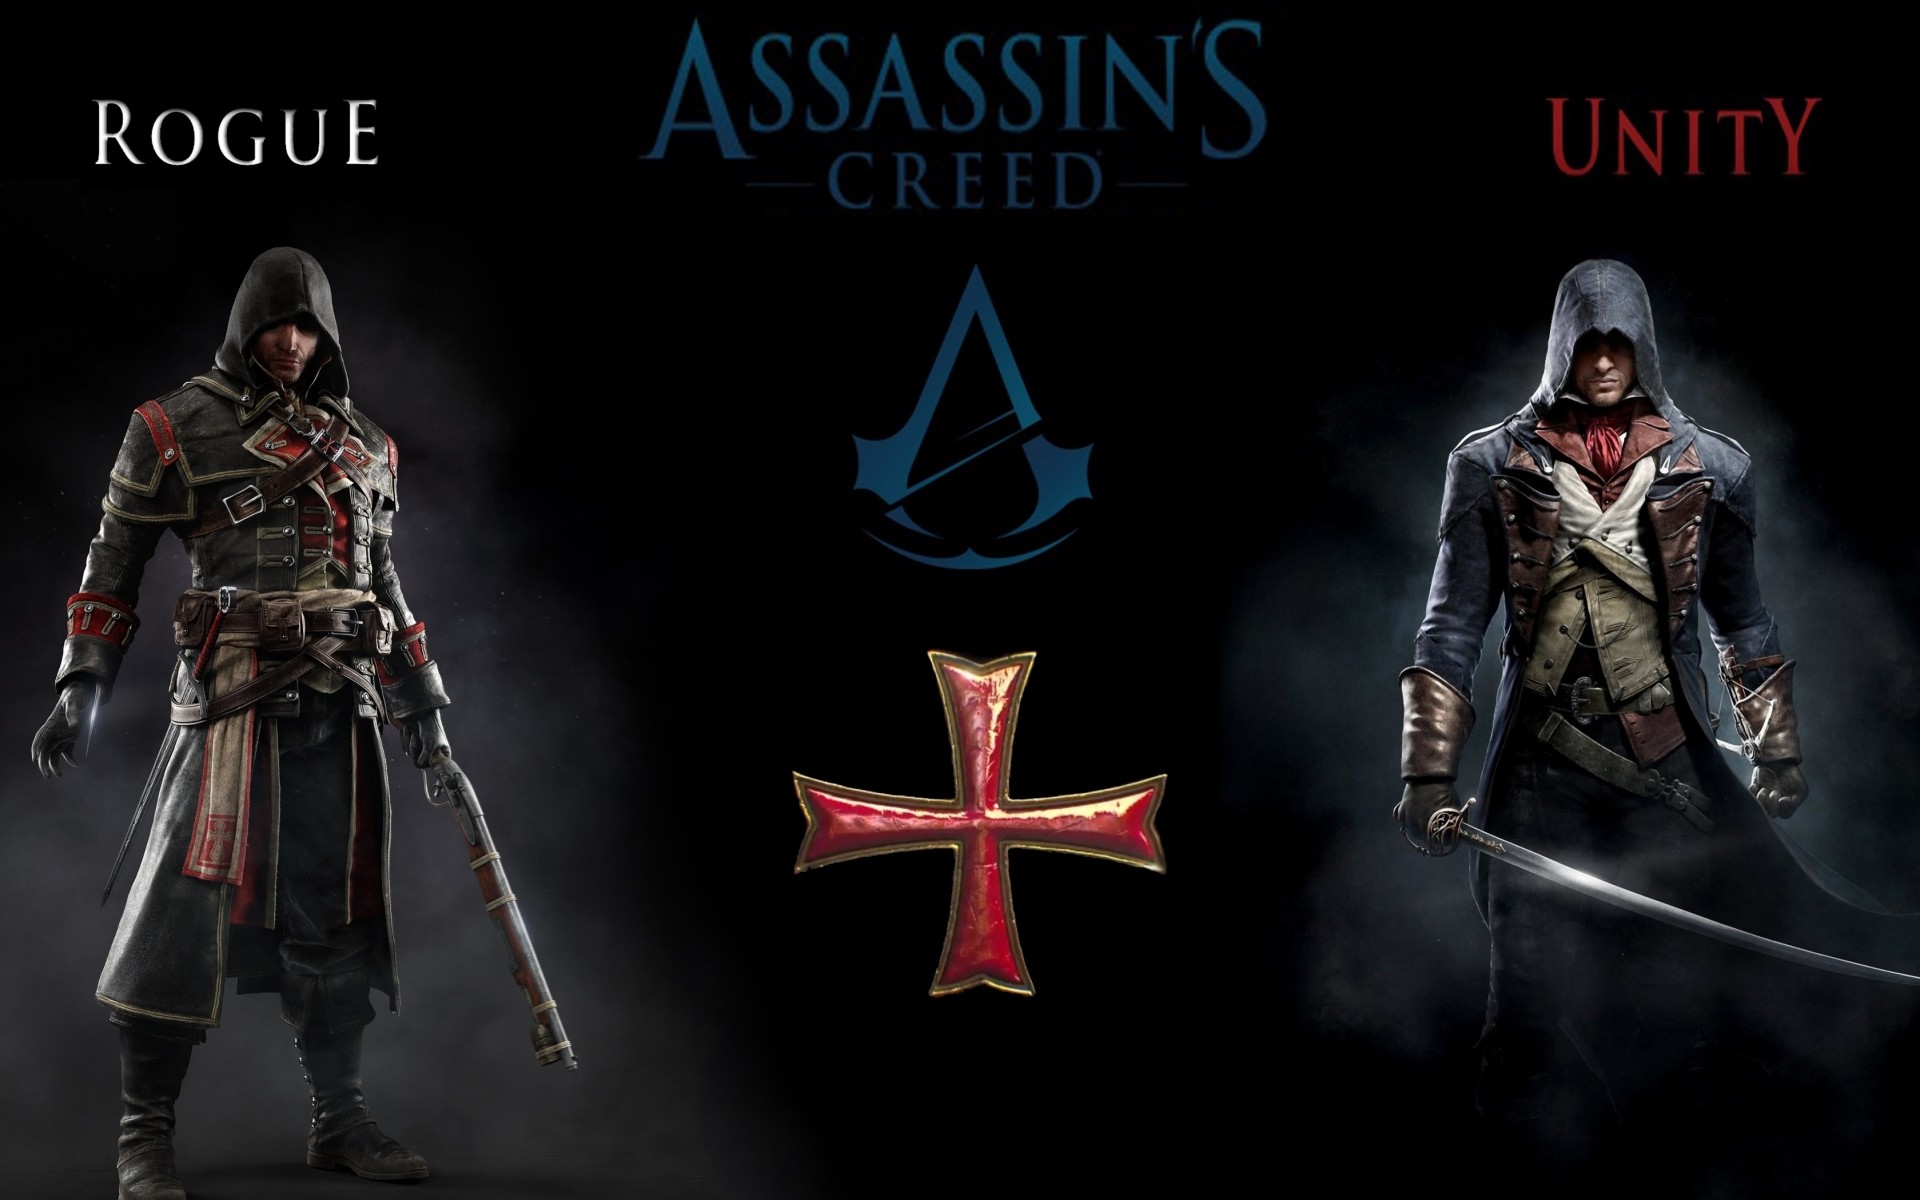 1920x1200 Wallpaper 1080p Assassin's Creed Unity Rogue Video Game HD wallpaper .